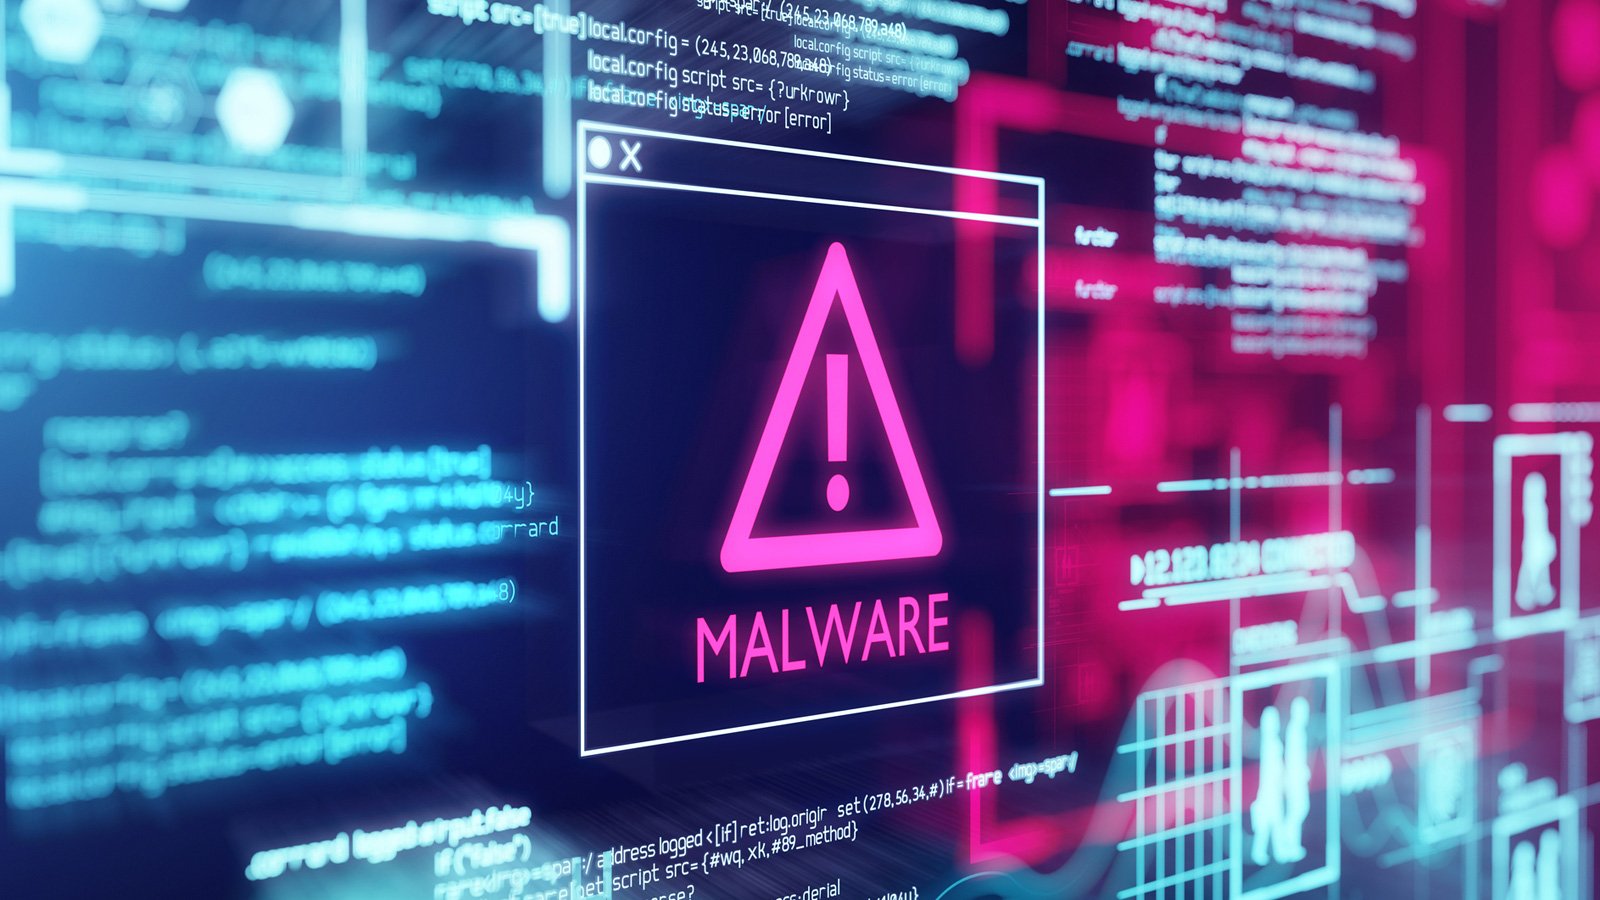 Beware of MalDoc in PDF: A New Polyglot Attack Allowing Attackers to Evade  Antivirus